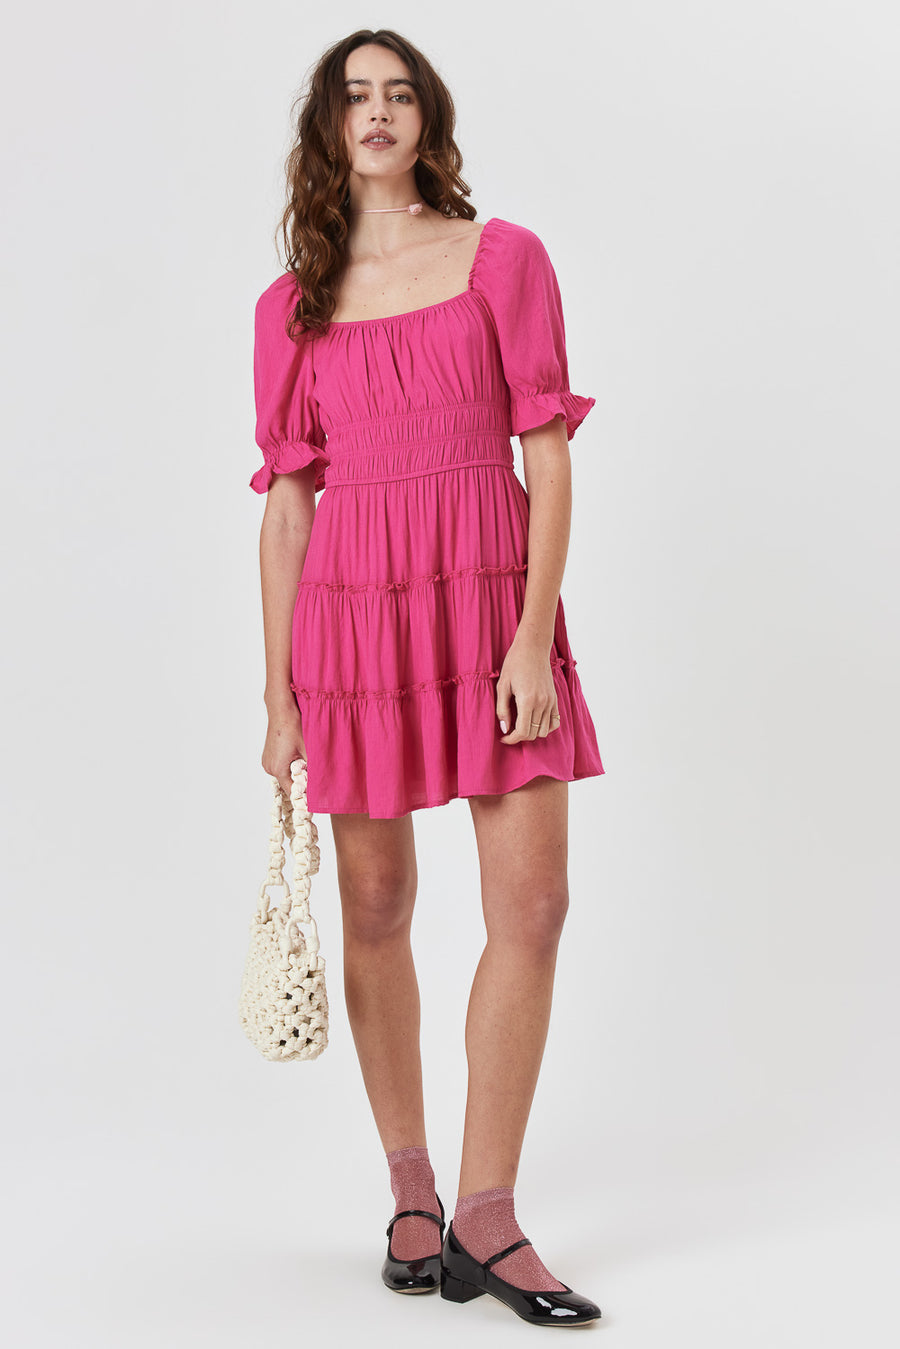 Vivacious Pink Tier Dress - Trixxi Clothing